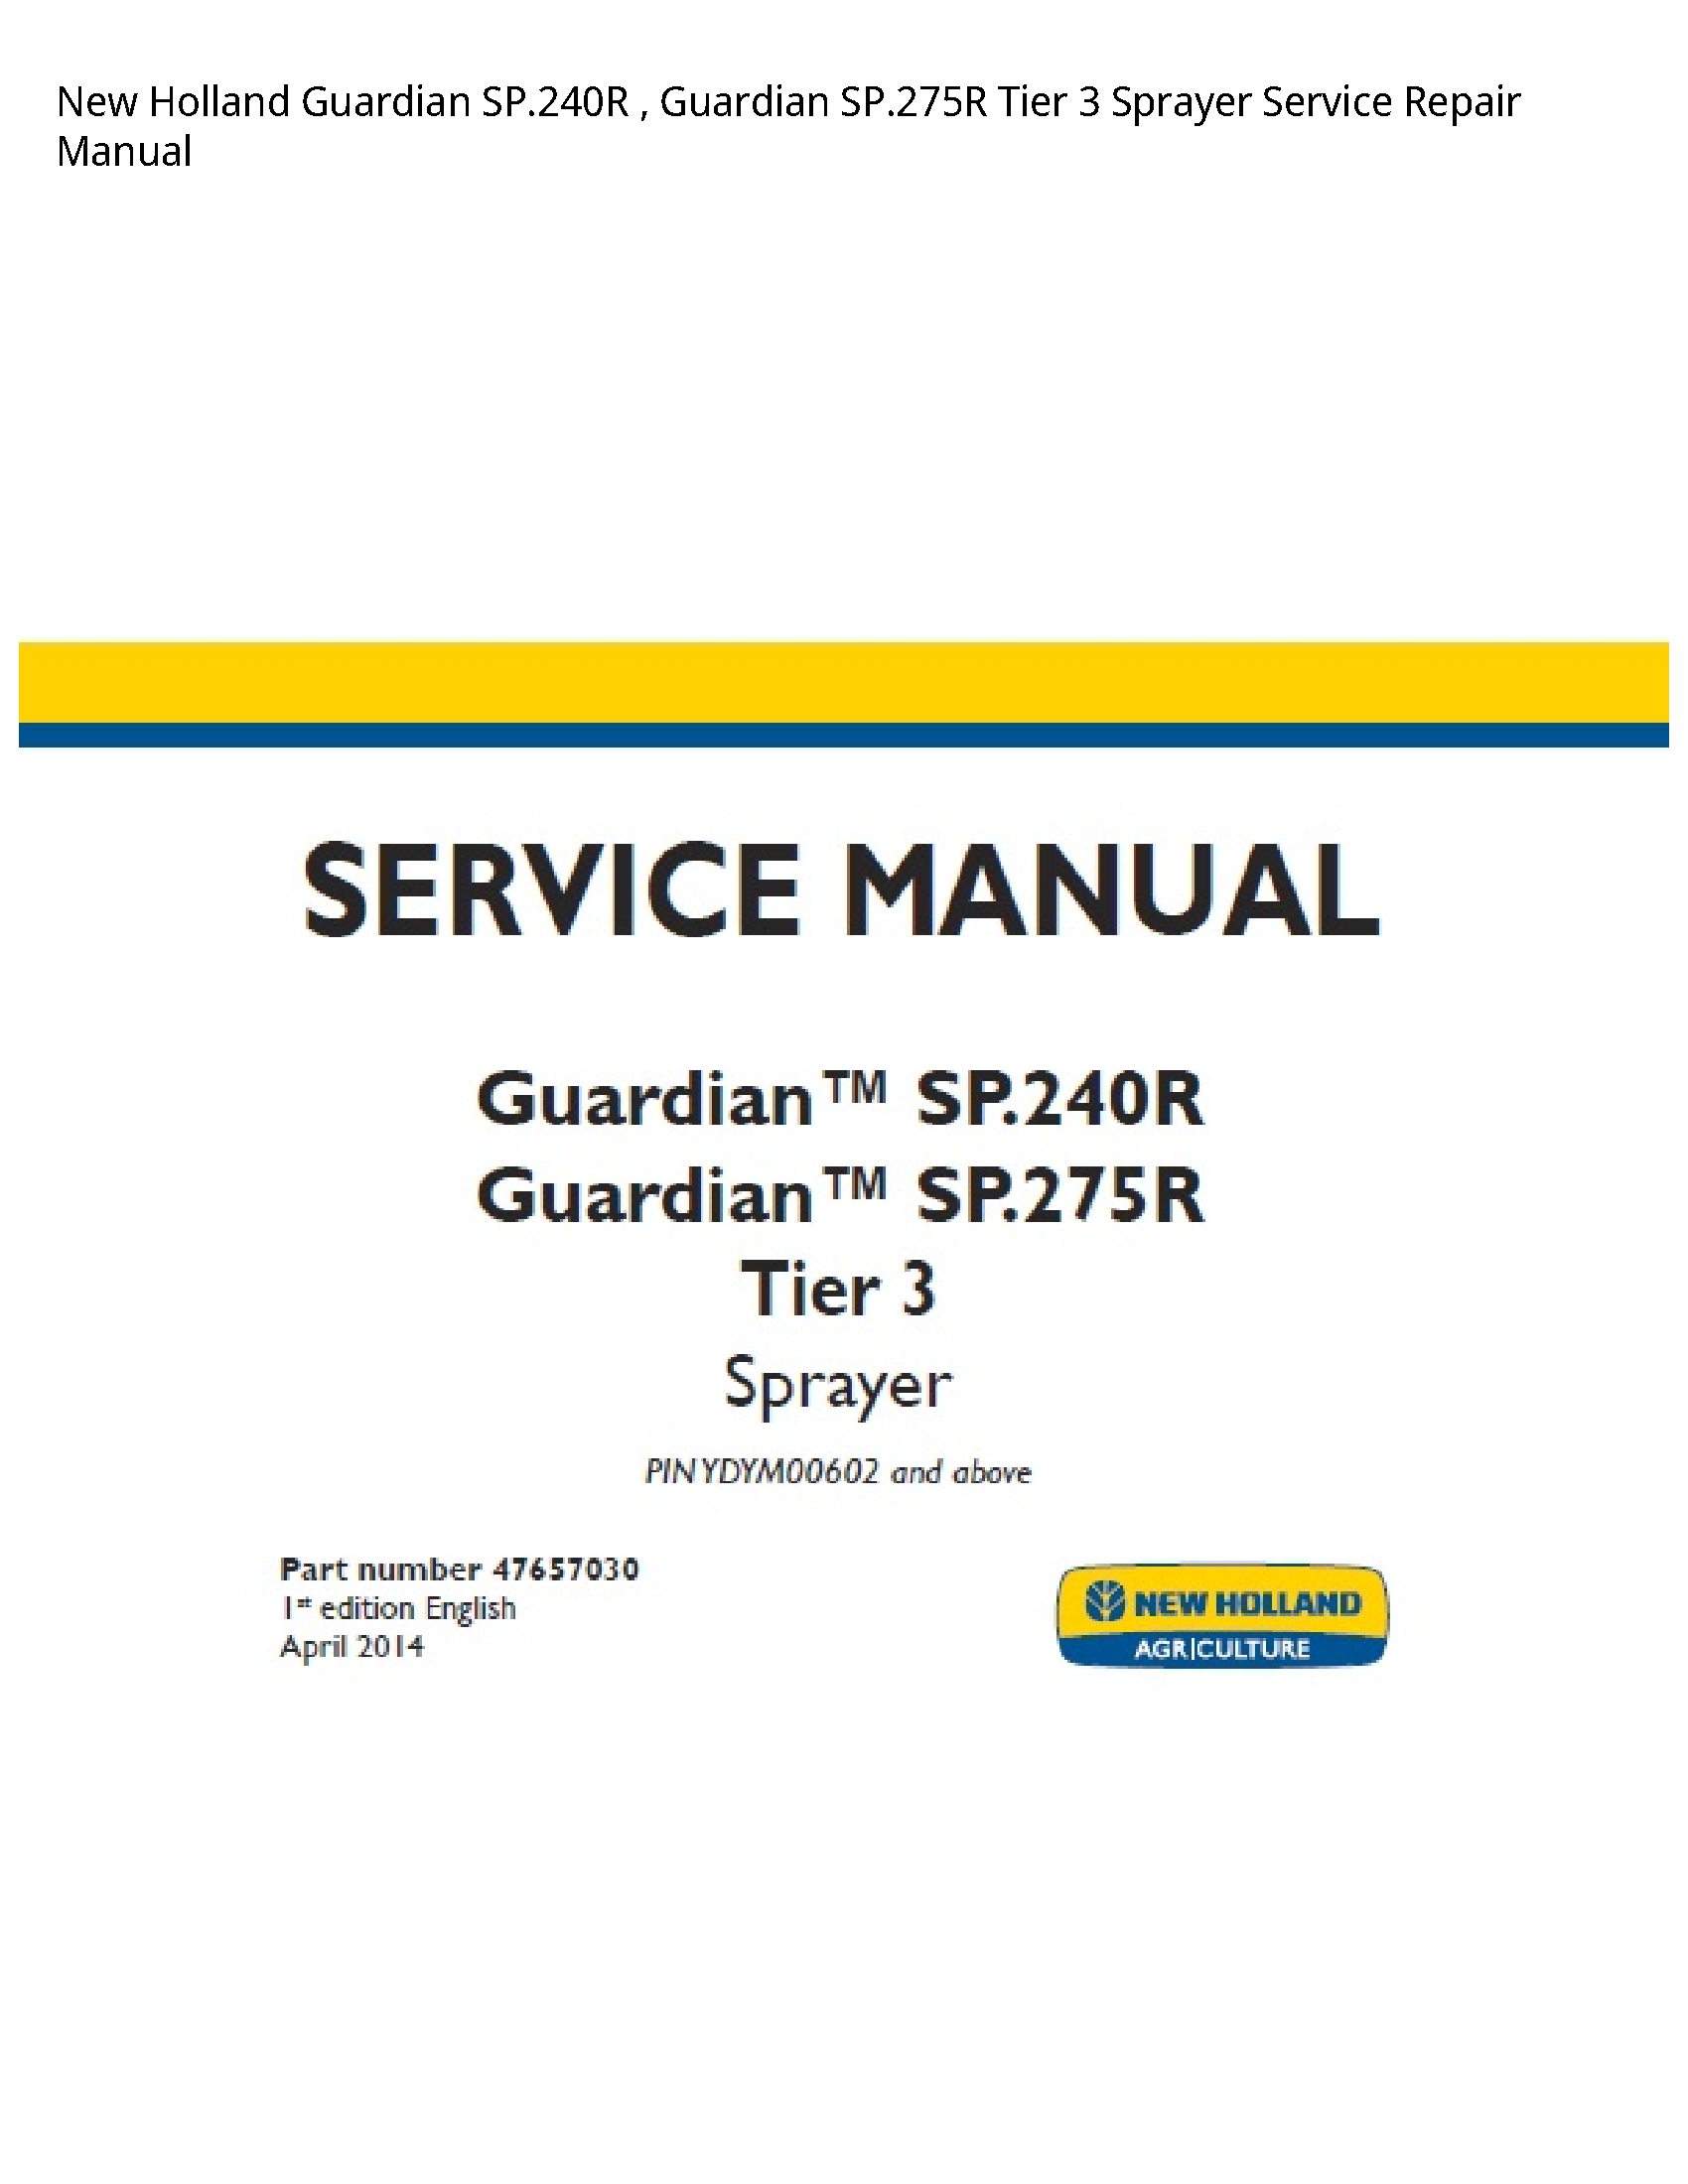 New Holland SP.240R Guardian Guardian Tier Sprayer manual